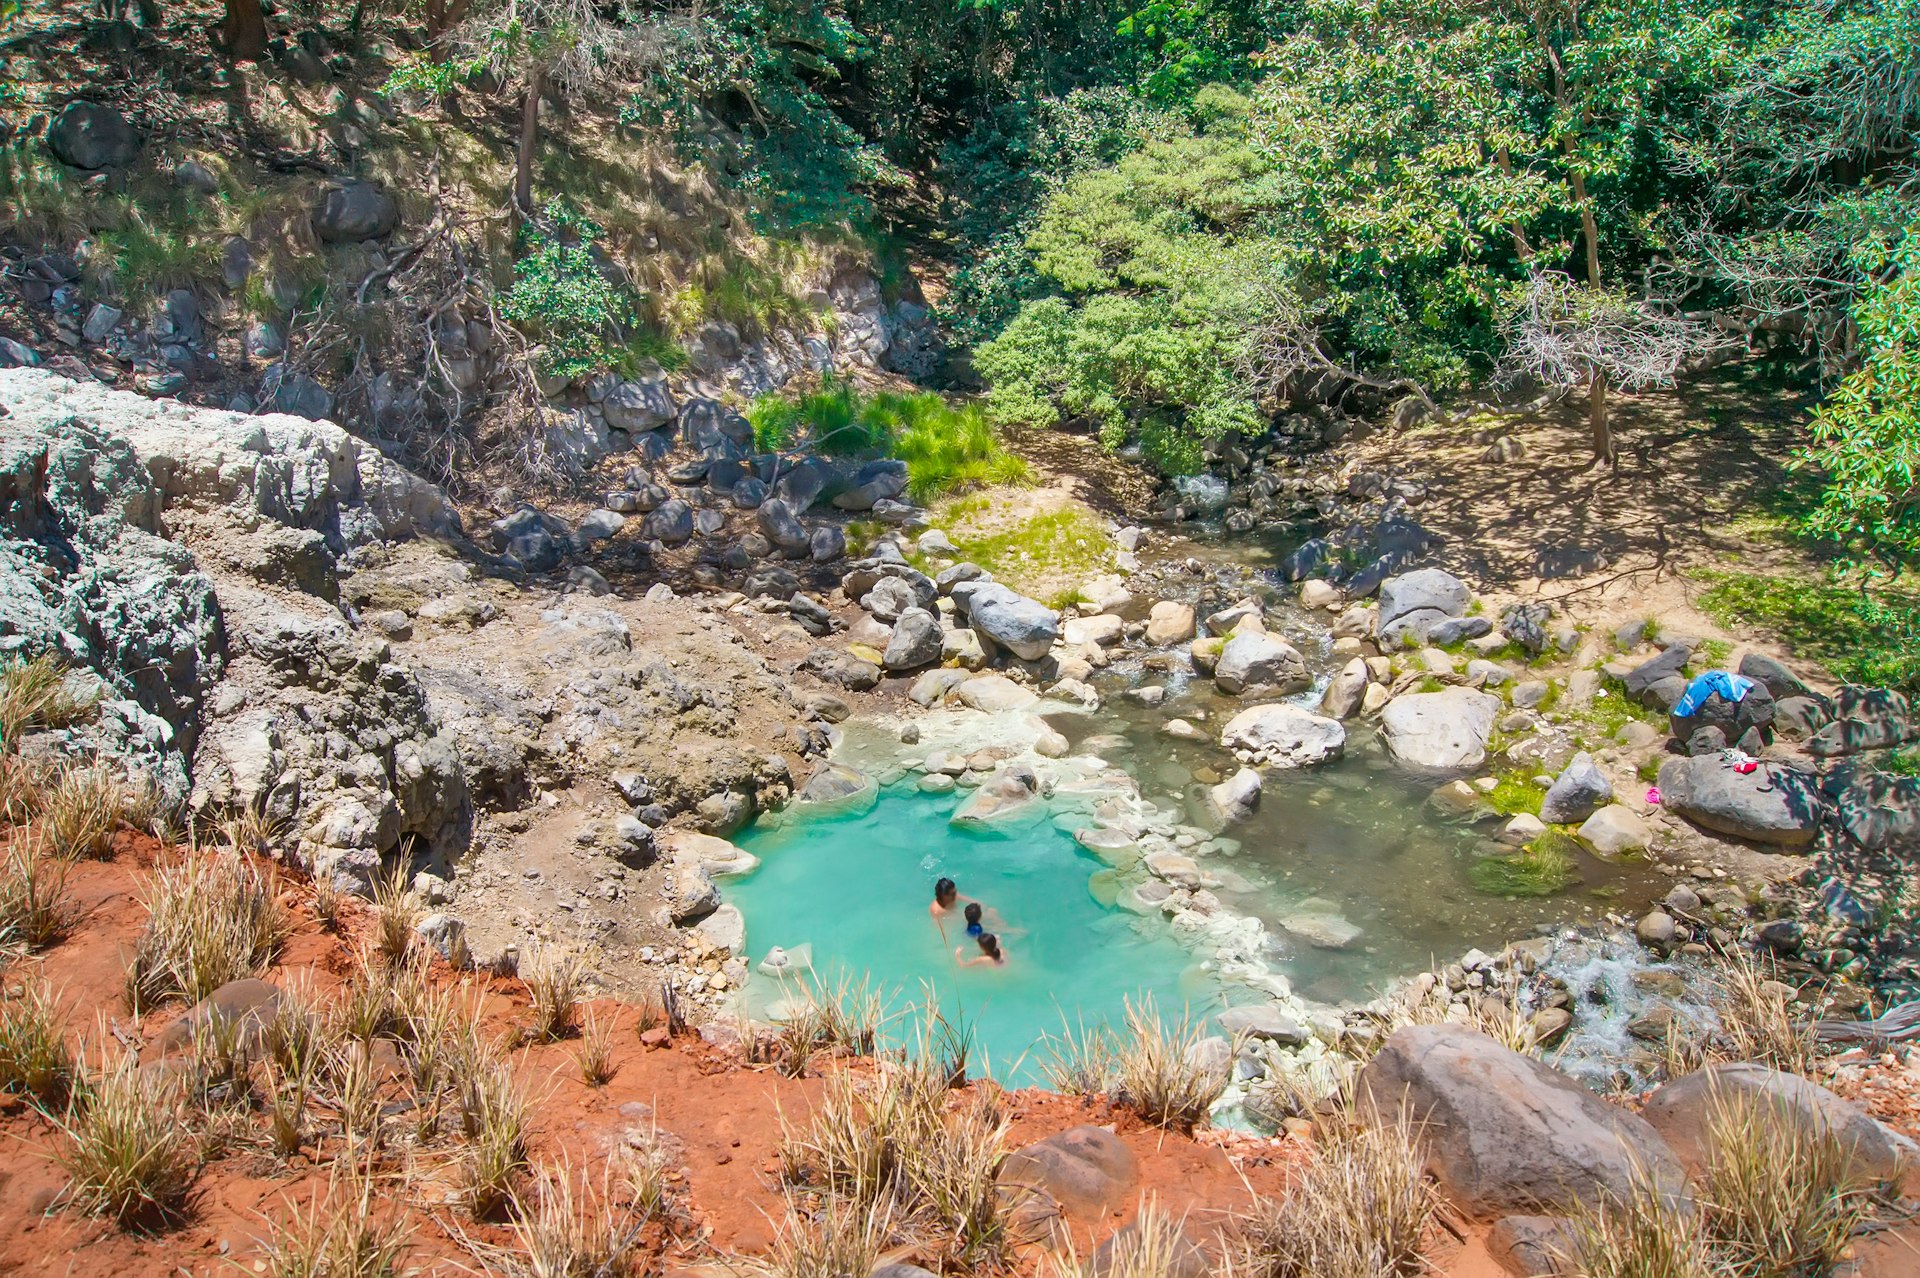 A couple takes a dip in the natural hot springs in Rincón de la Vieja in Costa Rica.